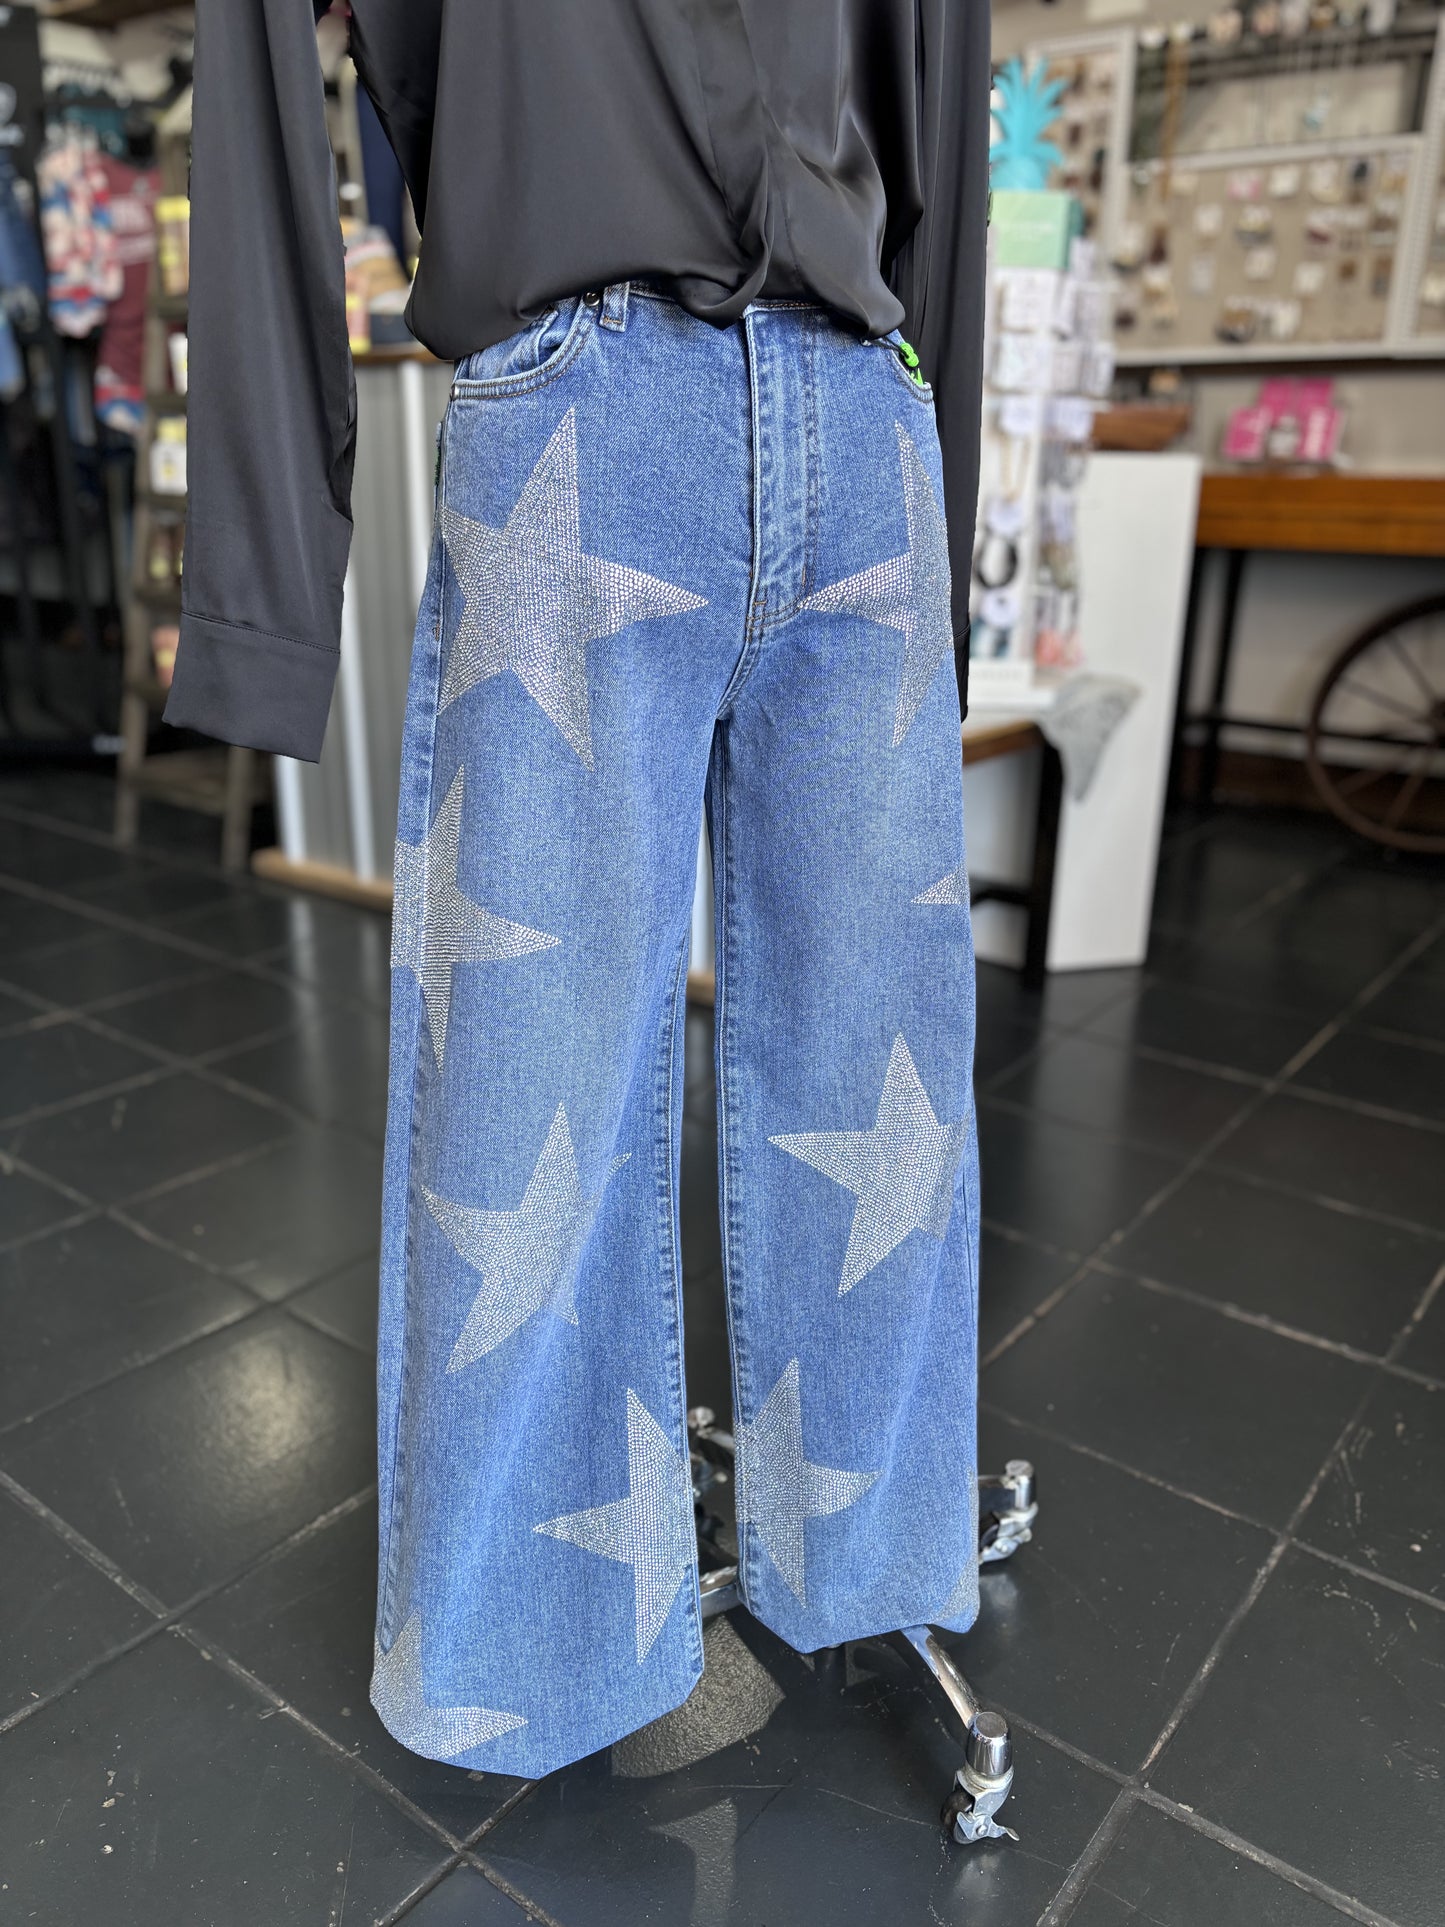 Vibrant Rhinestone Jeans